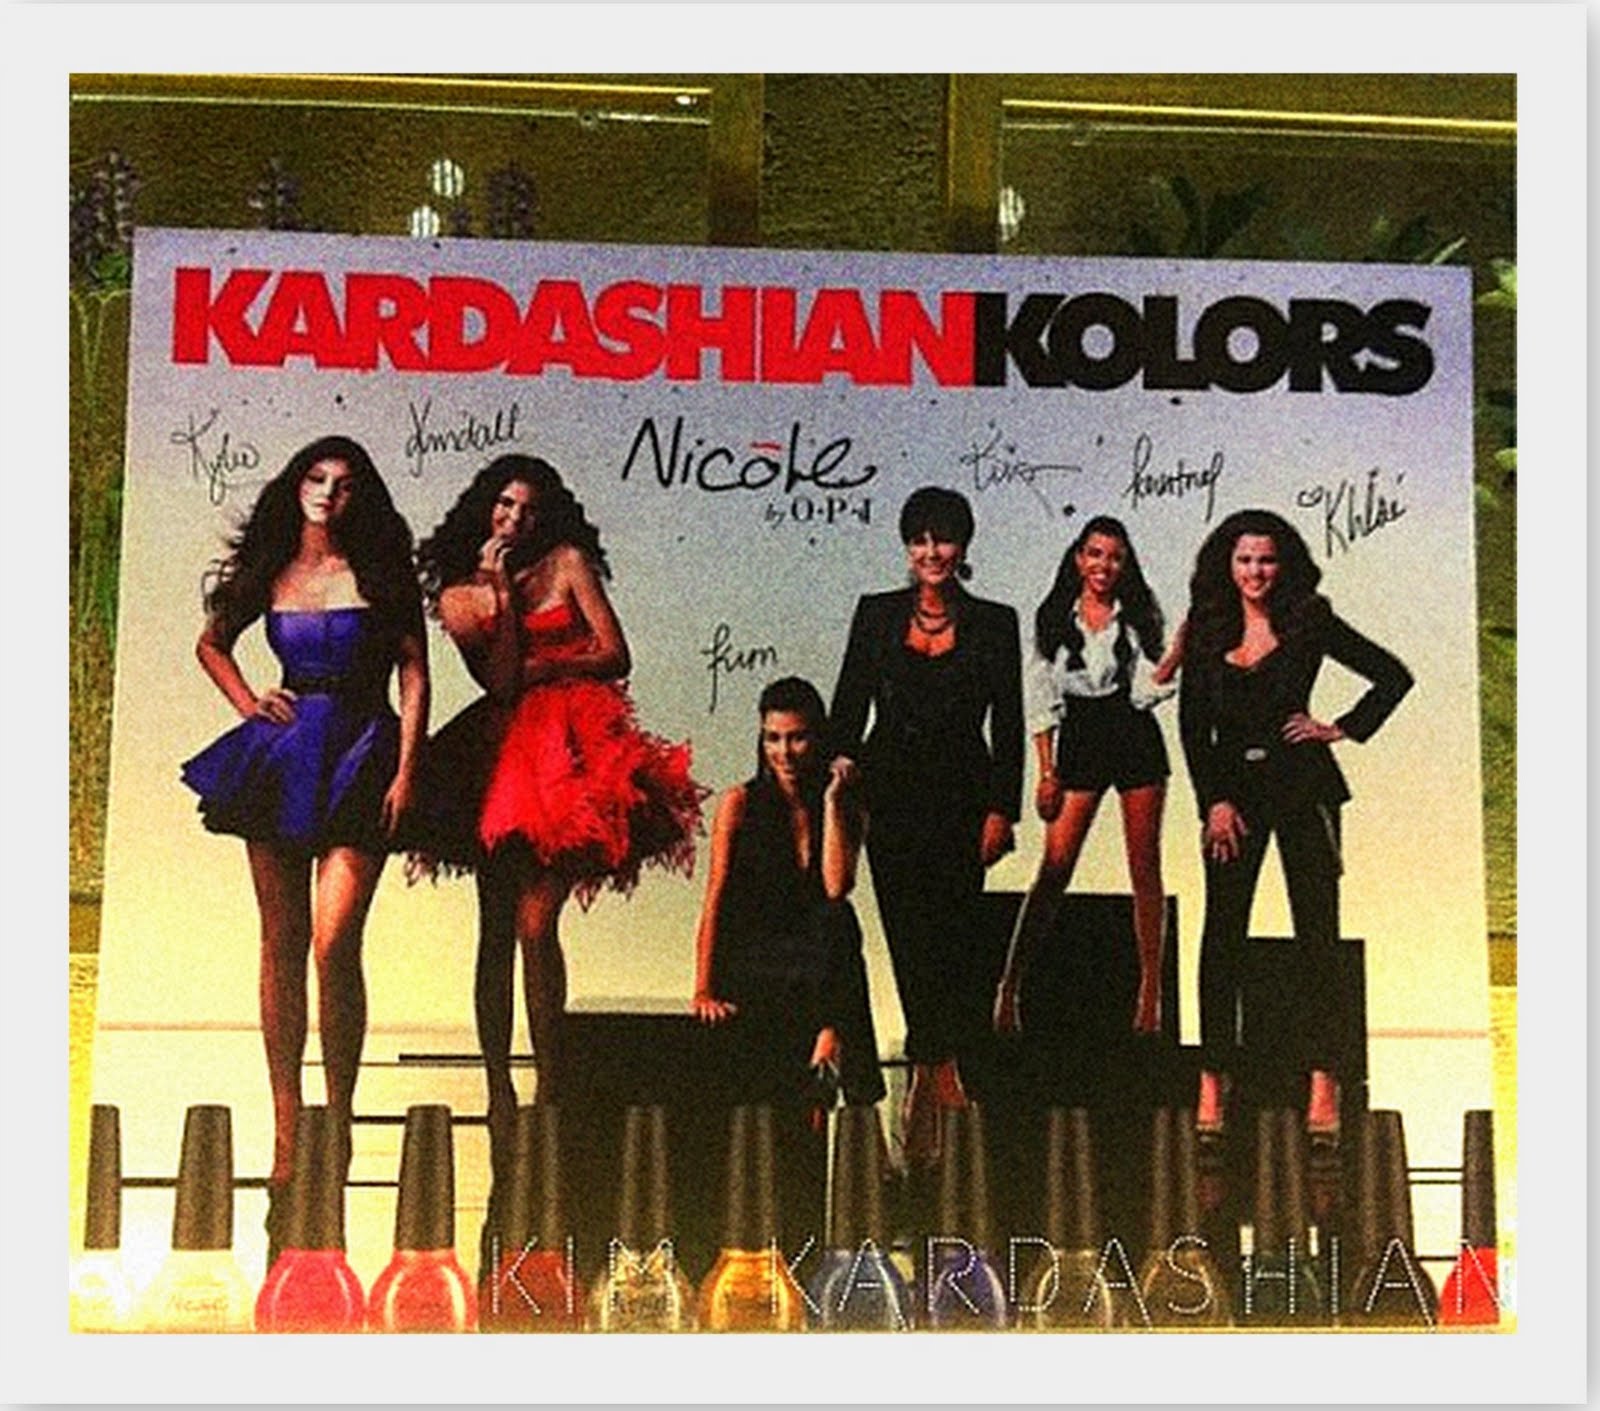 http://3.bp.blogspot.com/-jOnBU_5rboE/Th1CyG1747I/AAAAAAAABFQ/w0oXe5aikUw/s1600/Kardashian+Kolors1.jpg